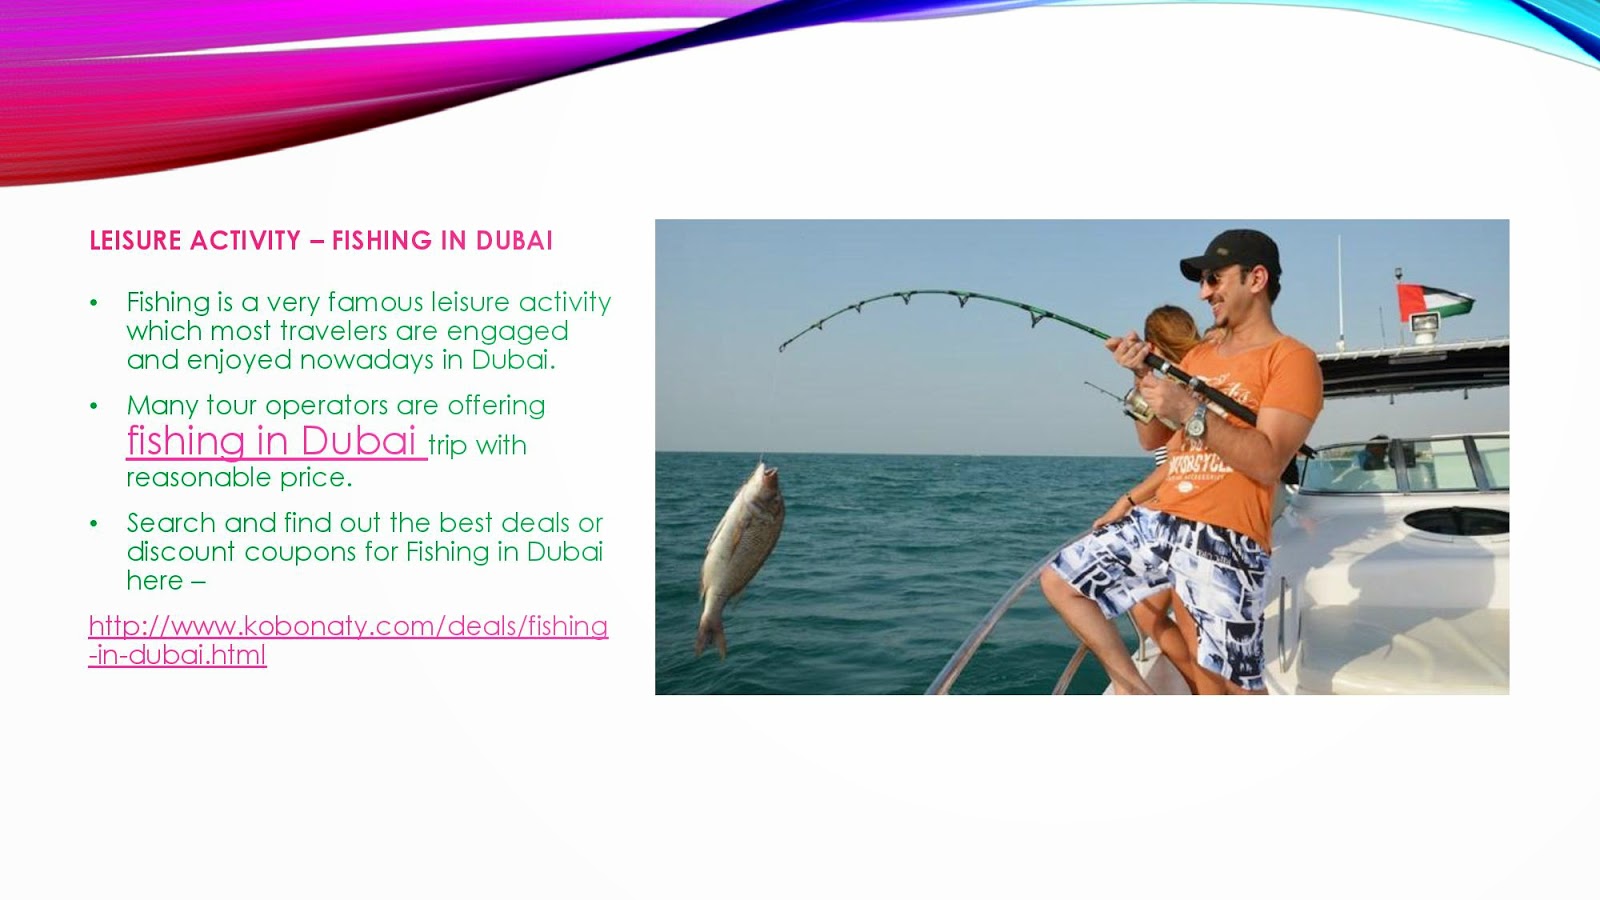 http://www.kobonaty.com/deals/fishing-in-dubai.html